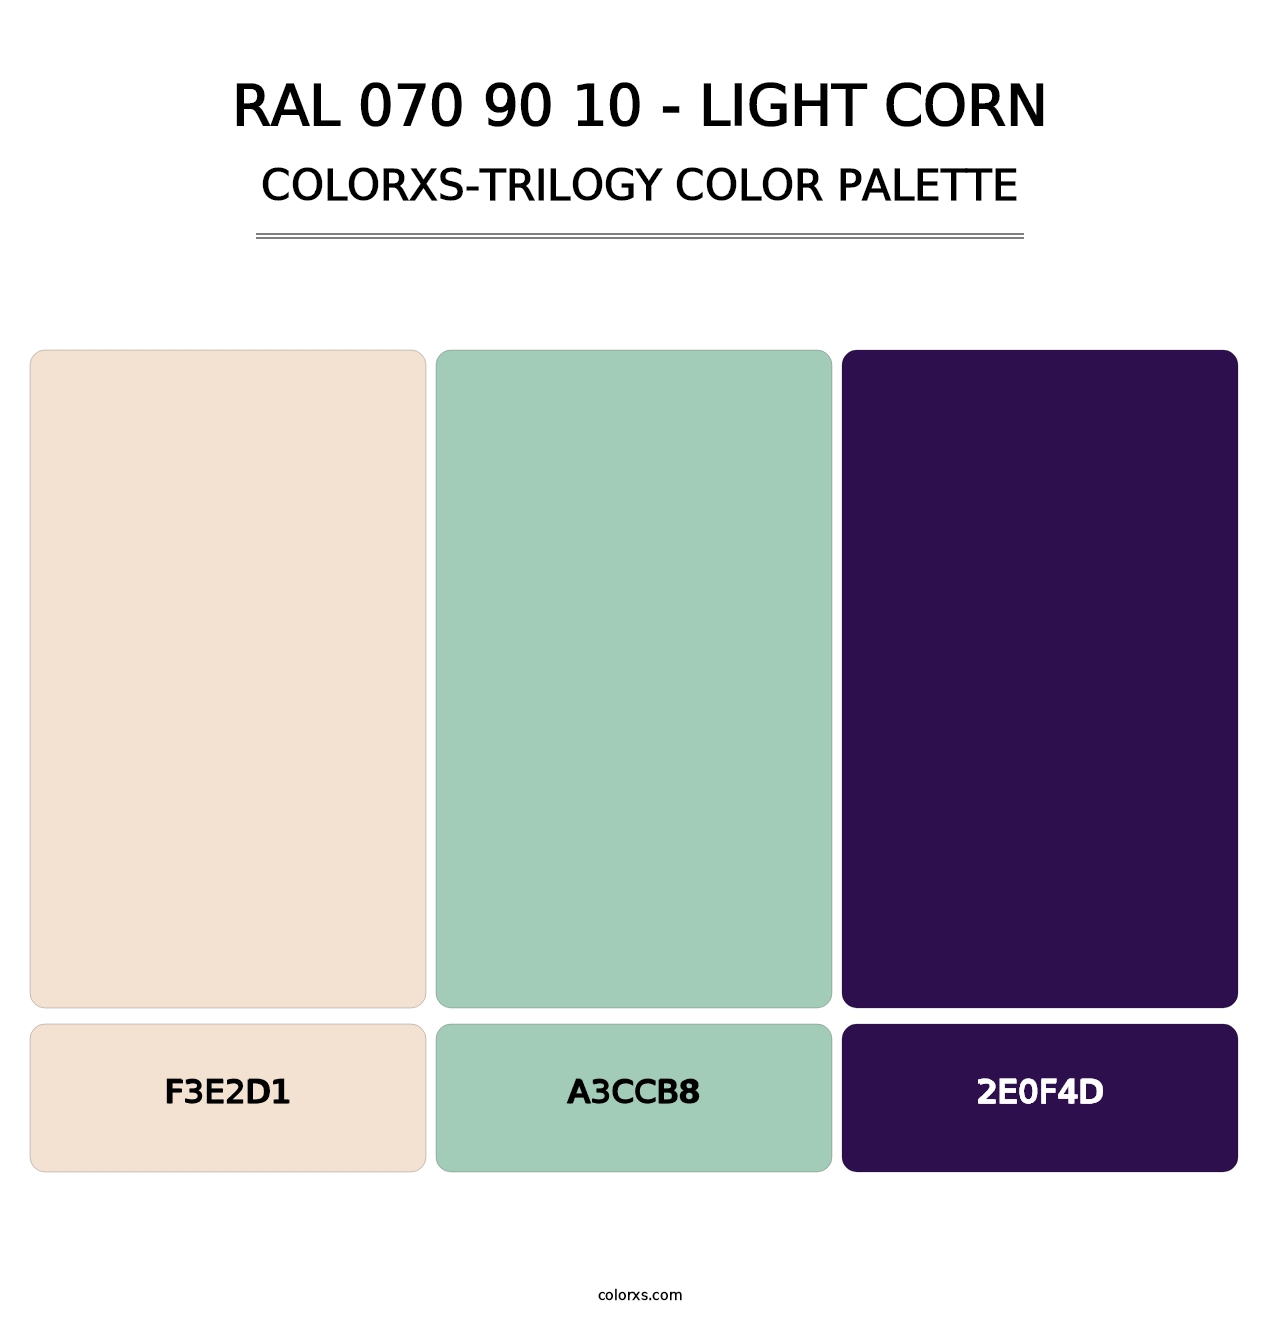 RAL 070 90 10 - Light Corn - Colorxs Trilogy Palette